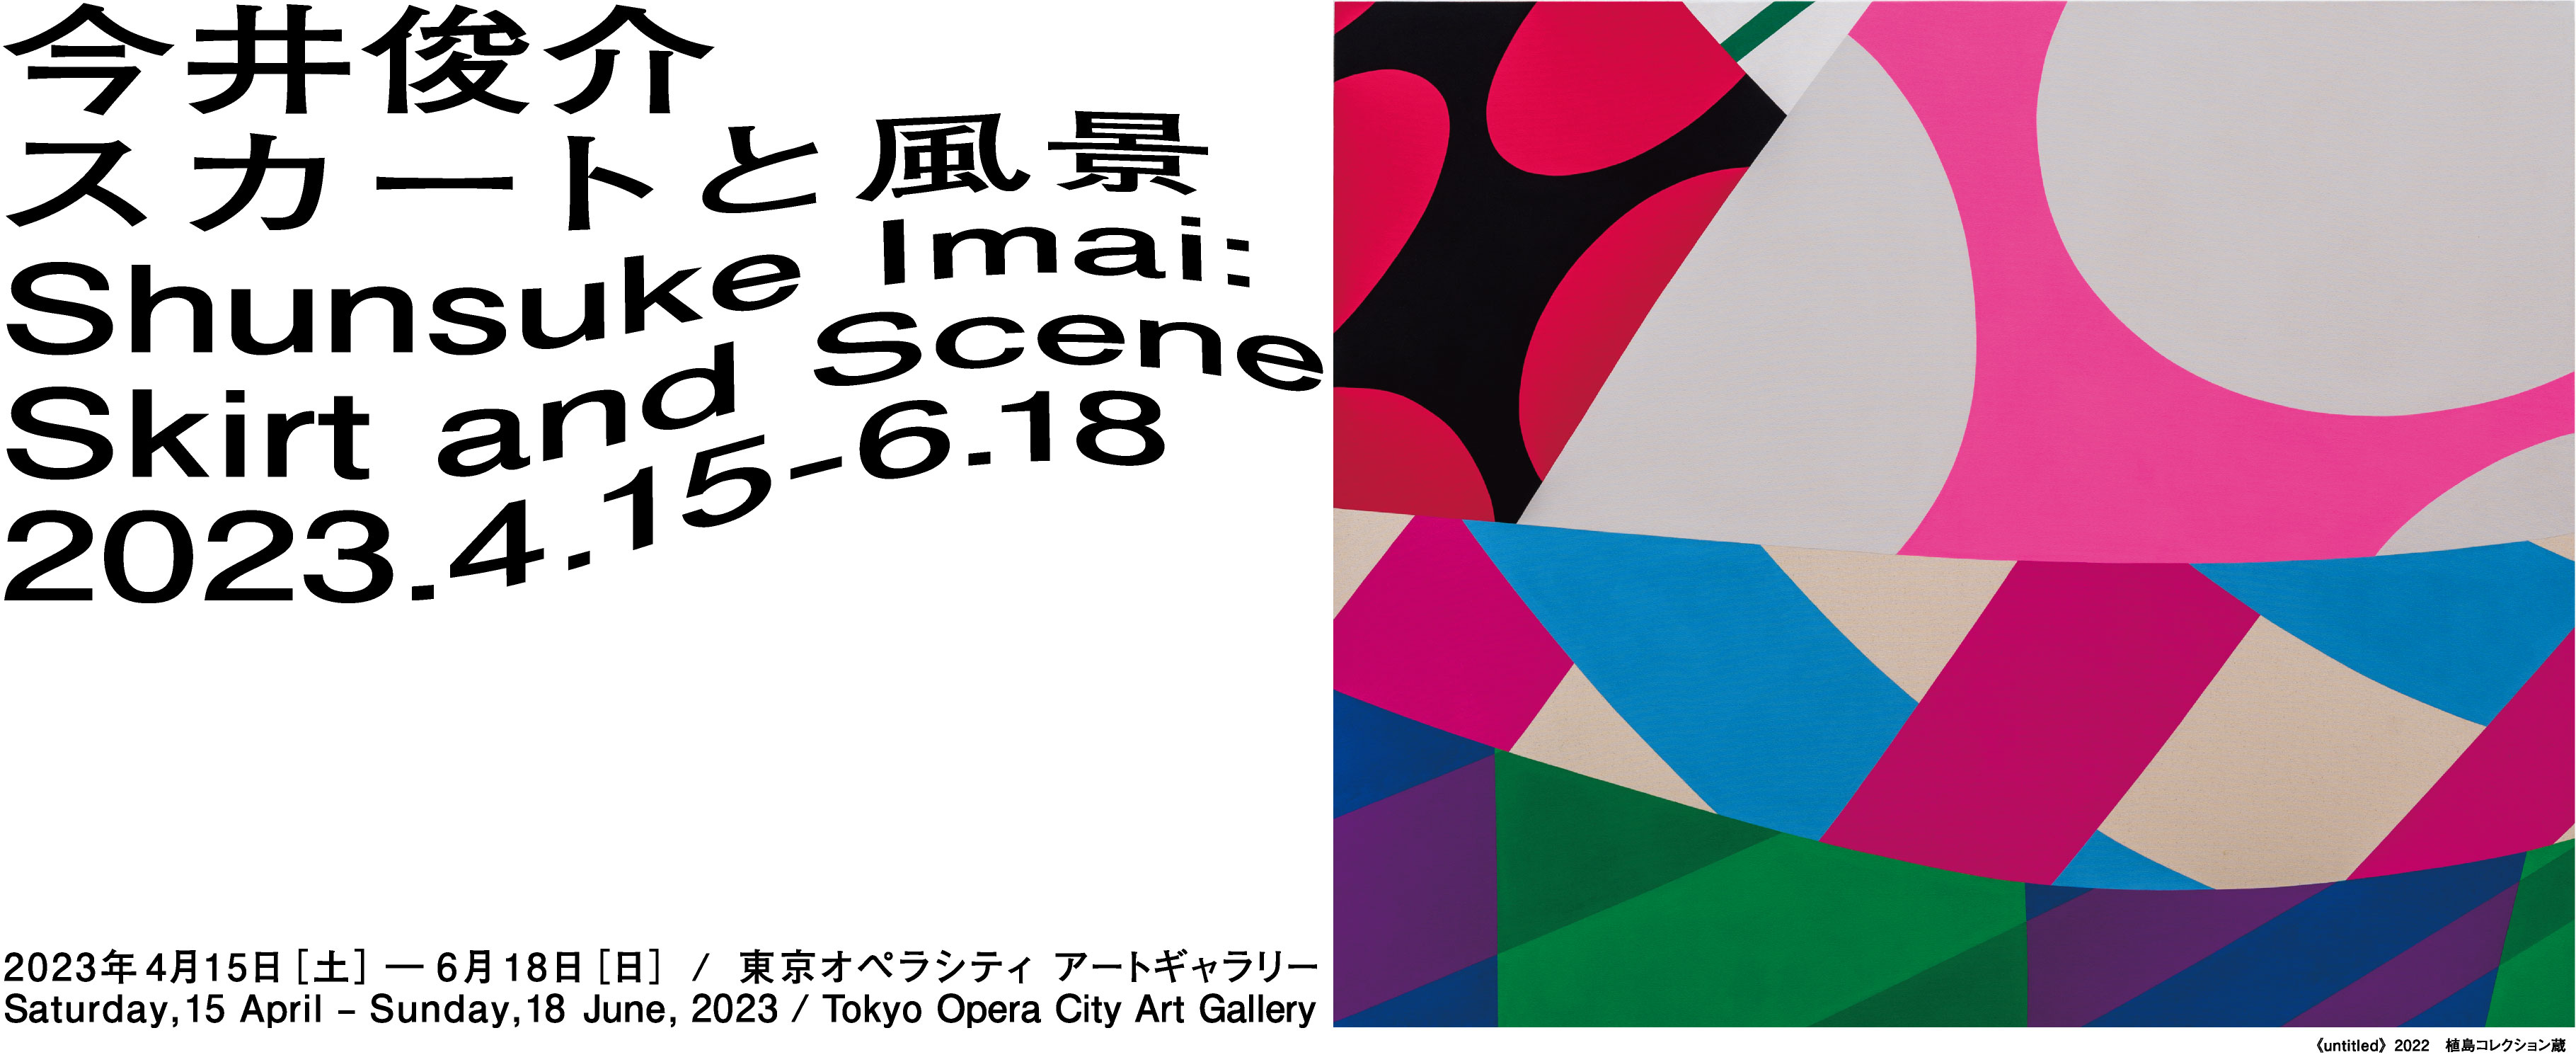 Shunsuke Imai:Skirt and Scene 2023.4.15-6.18